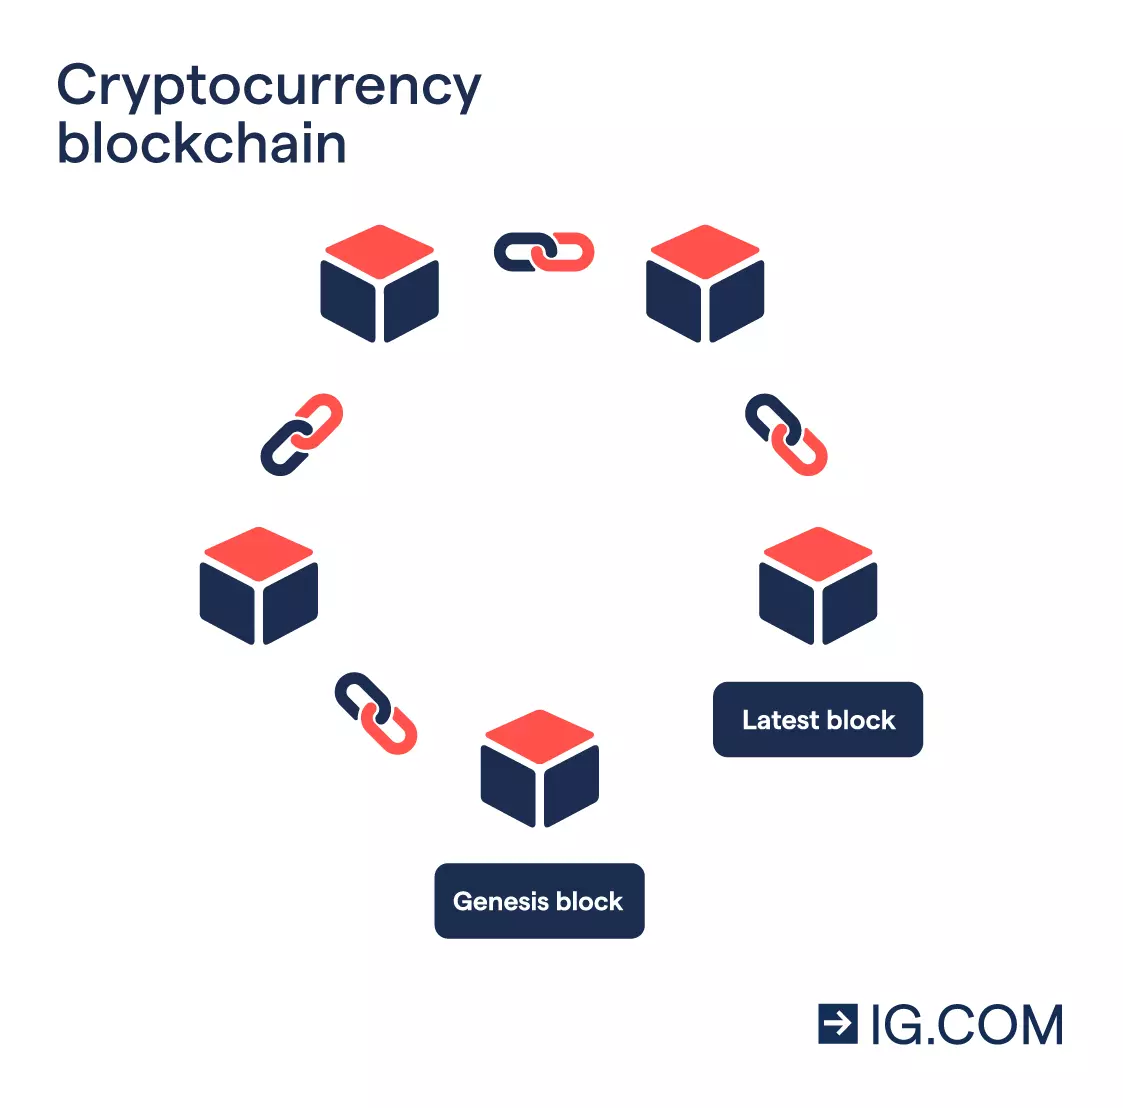 Graphic showing blockchain network